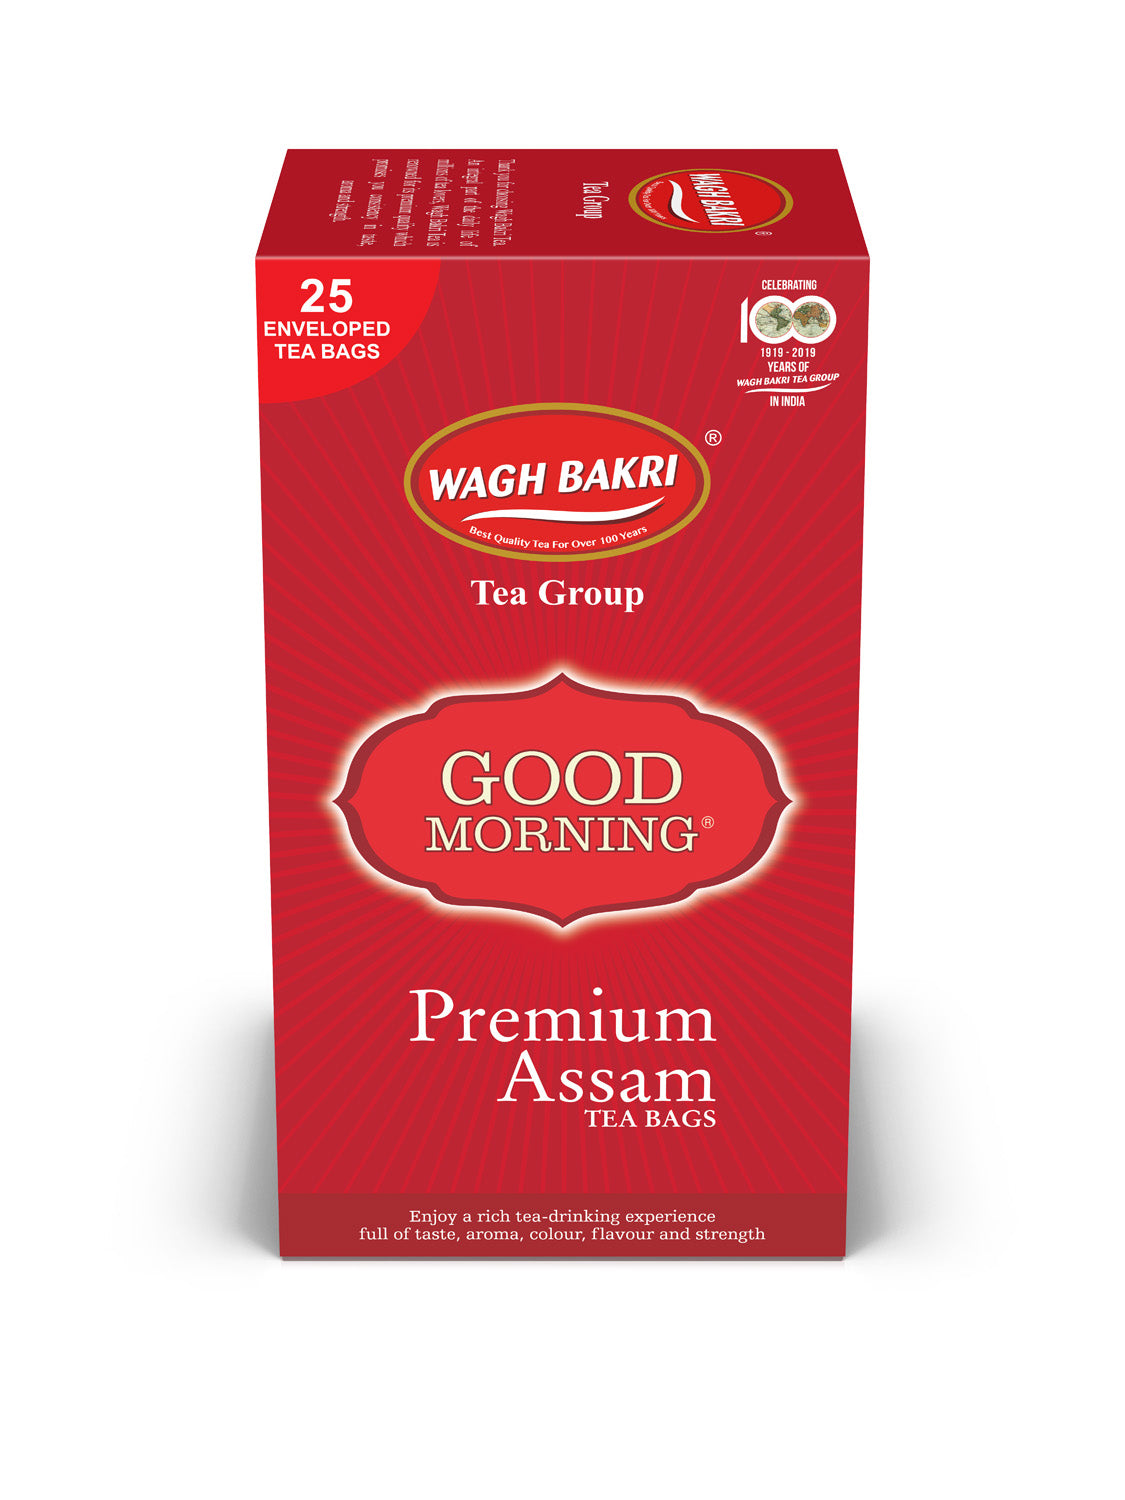 Good Morning Premium Assam Tea Bags